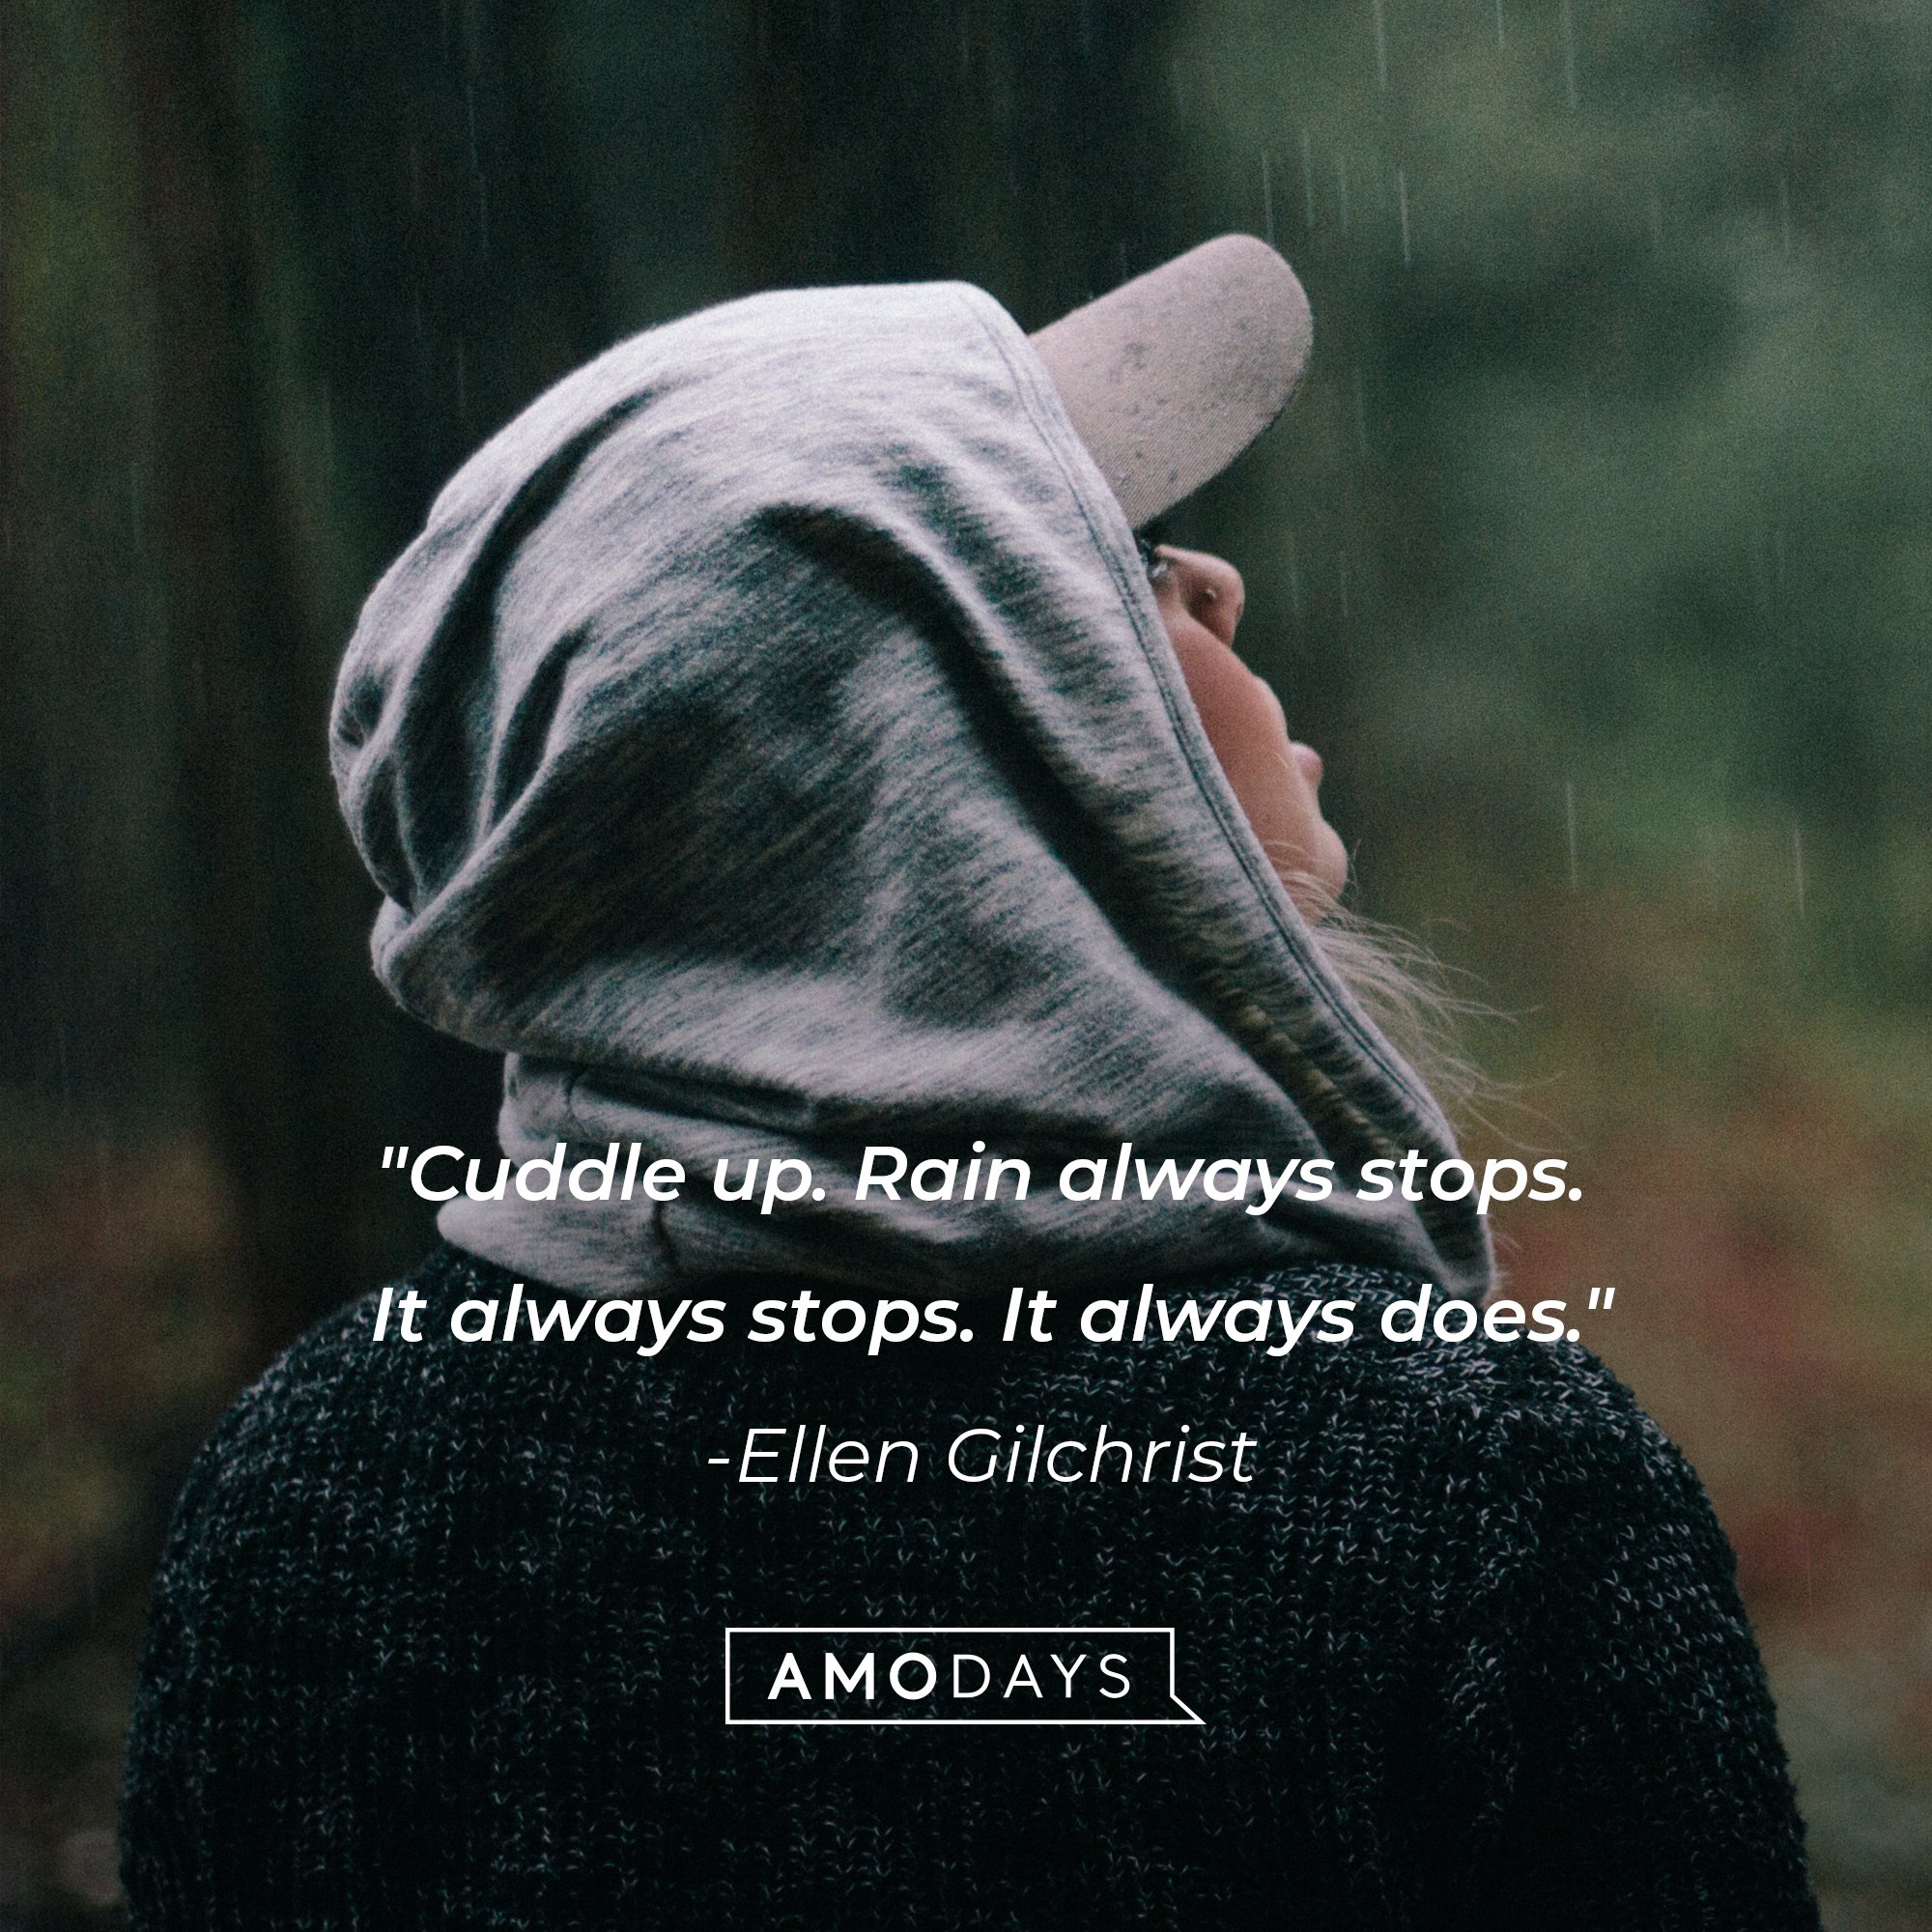 Ellen Gilchrist's quote: "Cuddle up. Rain always stops. It always stops. It always does." | Image: AmoDays